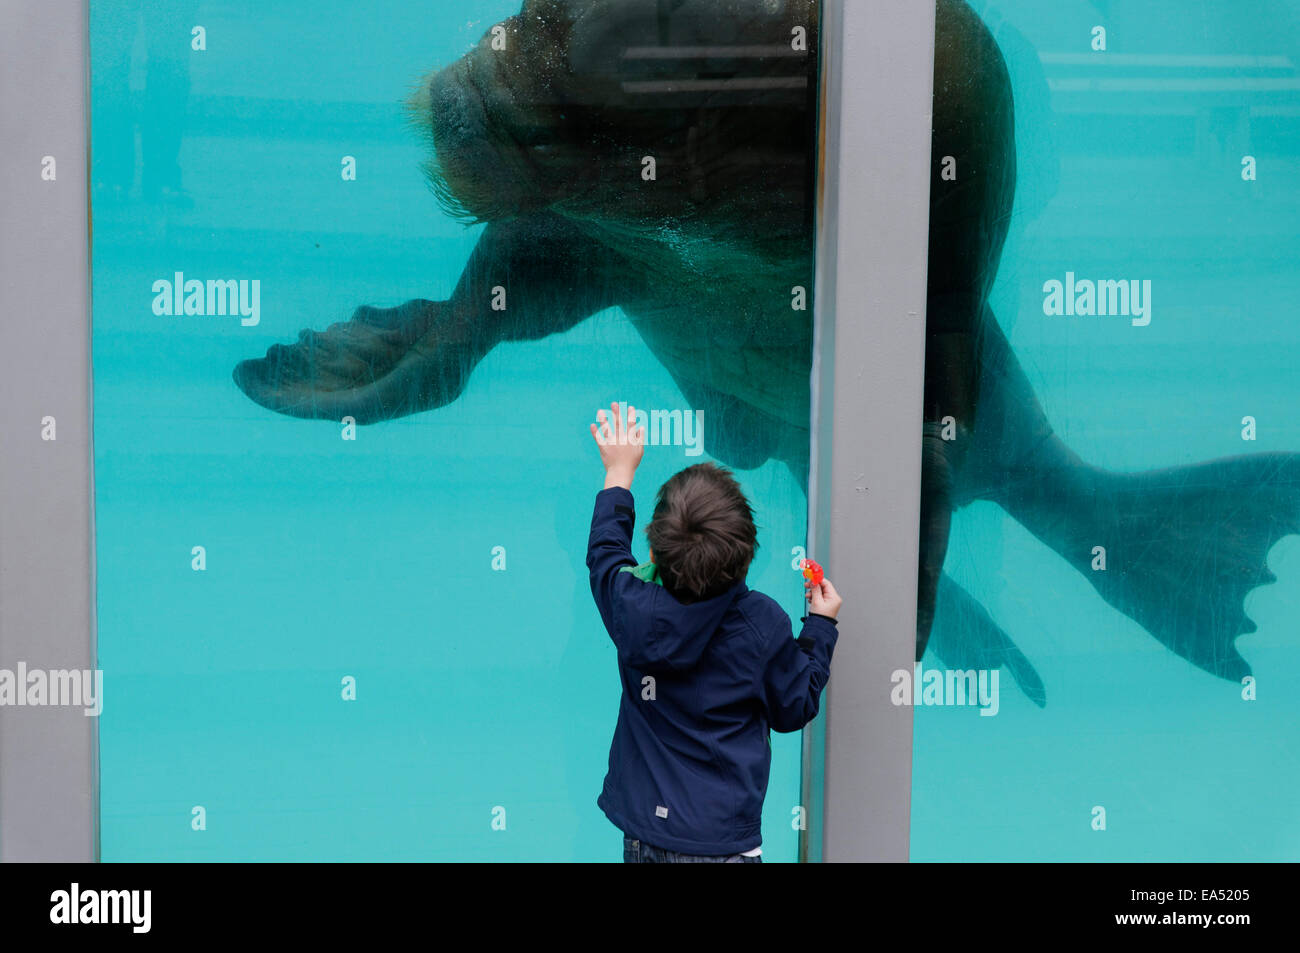 A young boy reaching to touch a walrus in an aquarium Stock Photo